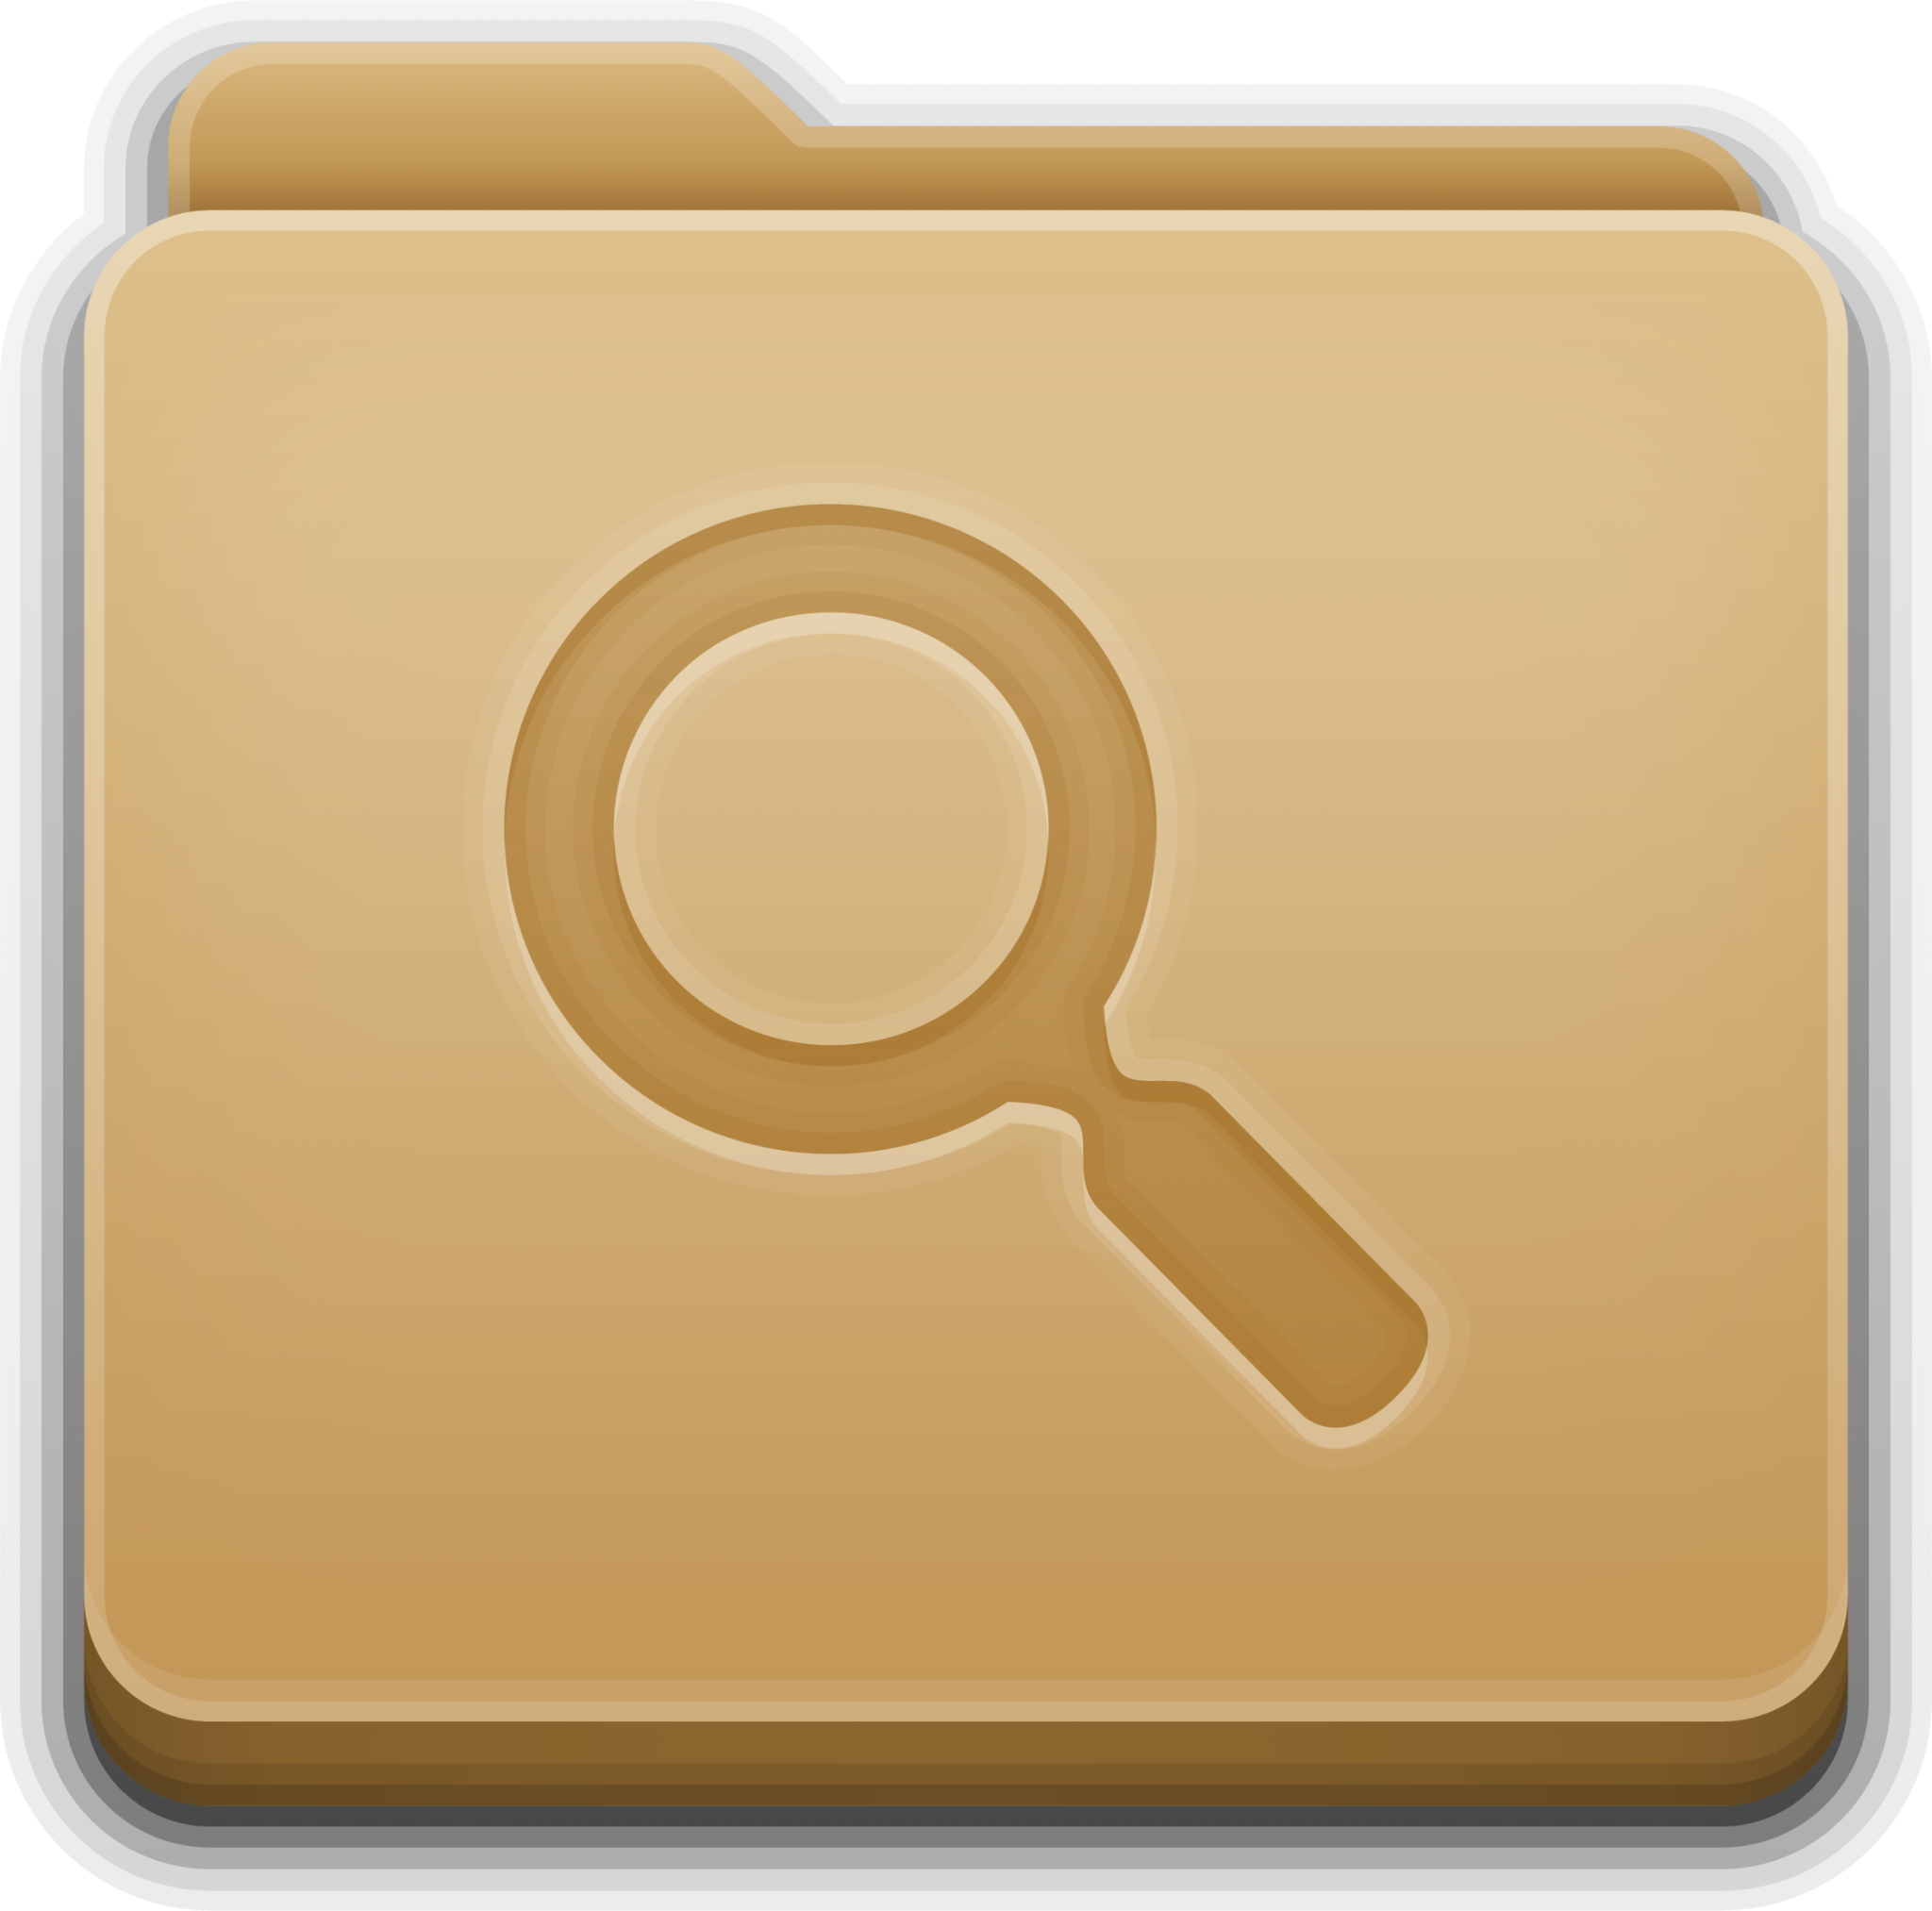 folder saved search icon